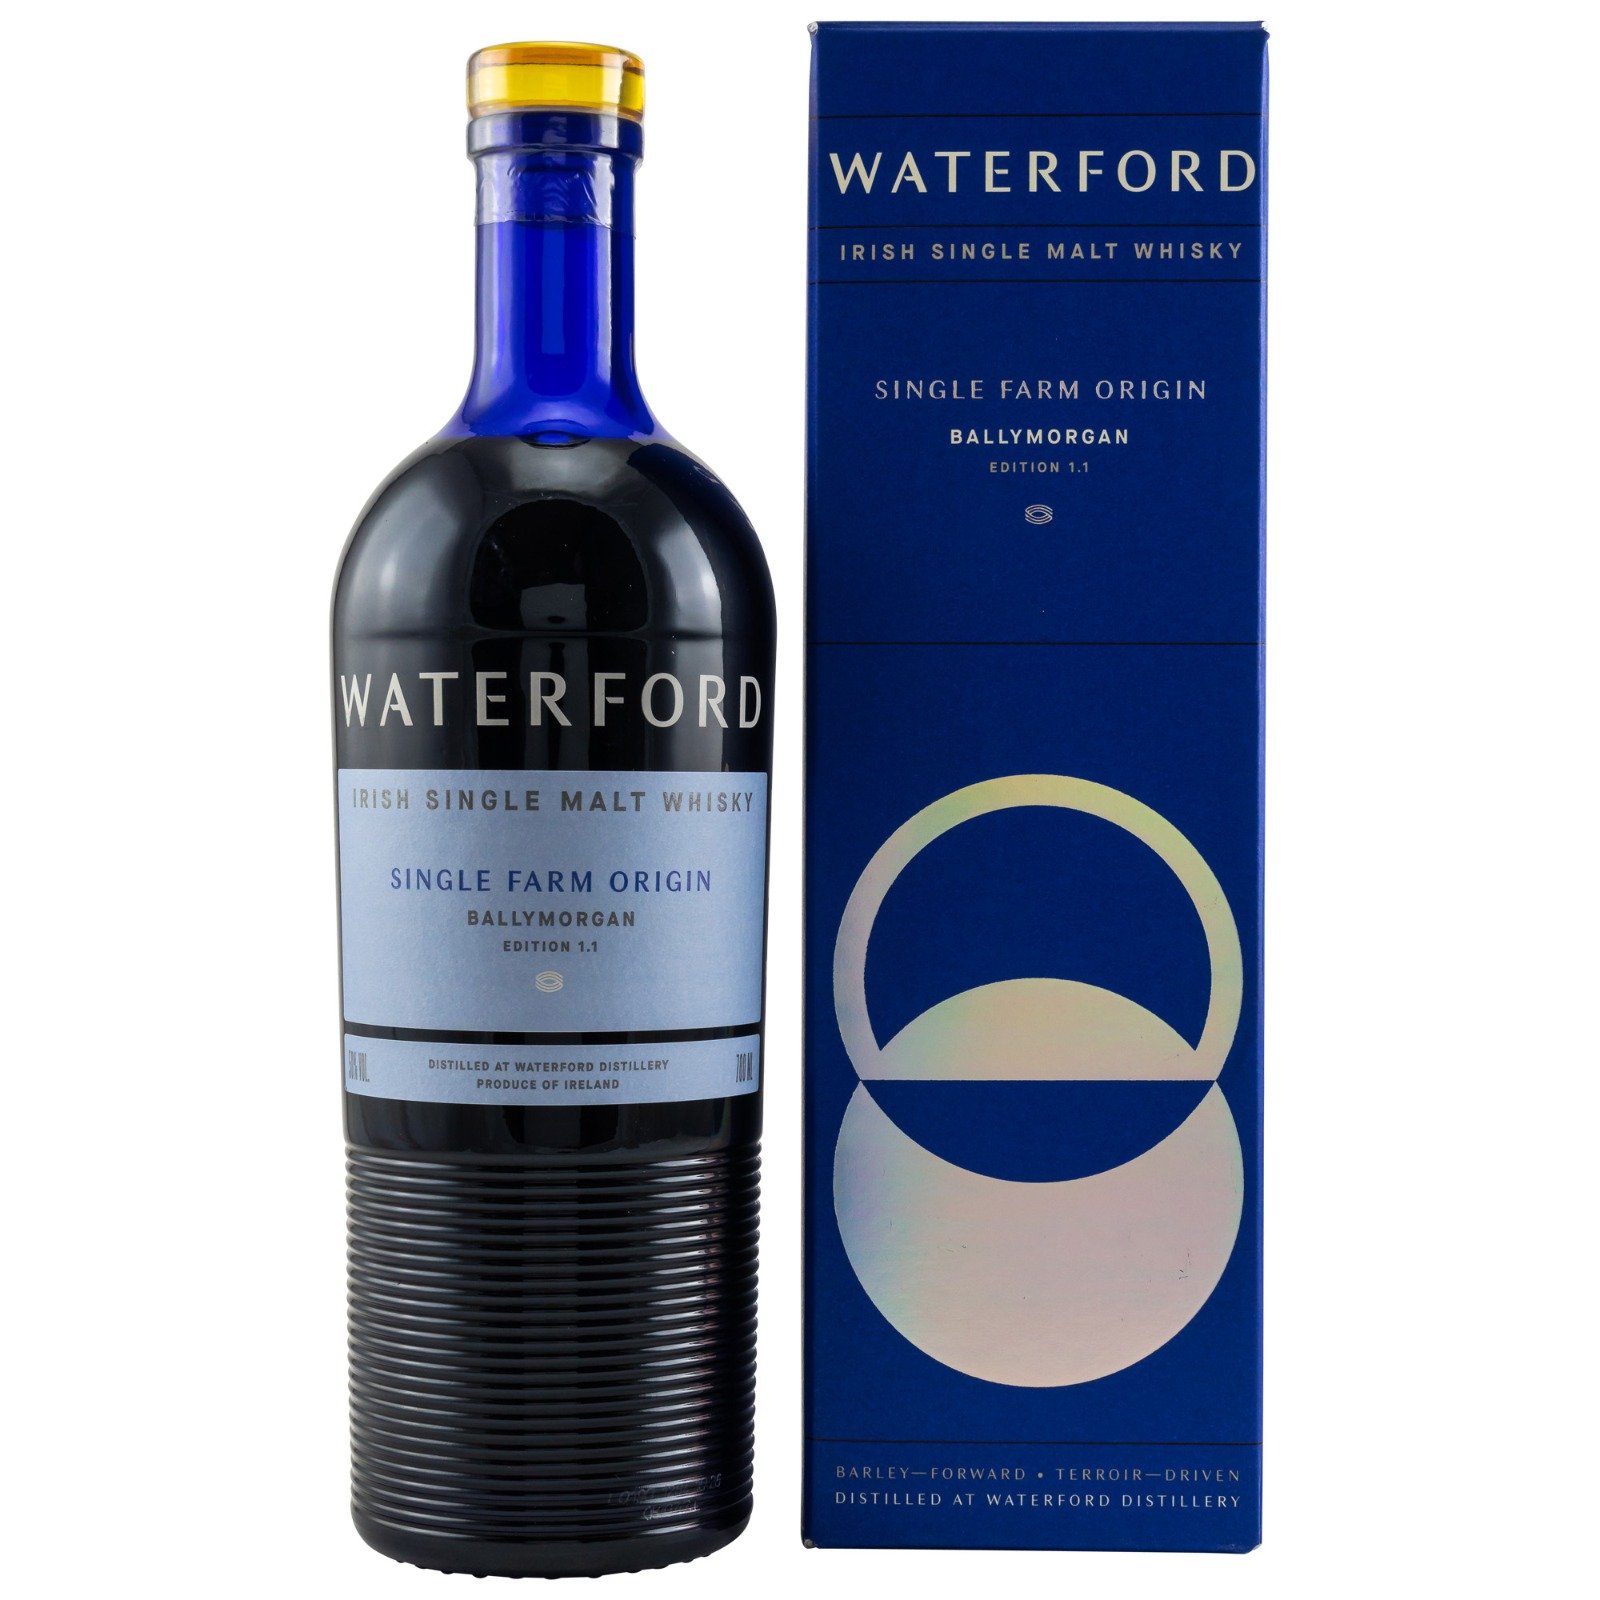 Waterford Ballymorgan Edition 1.1 Single Farm Origins Irish Single Malt Whisky